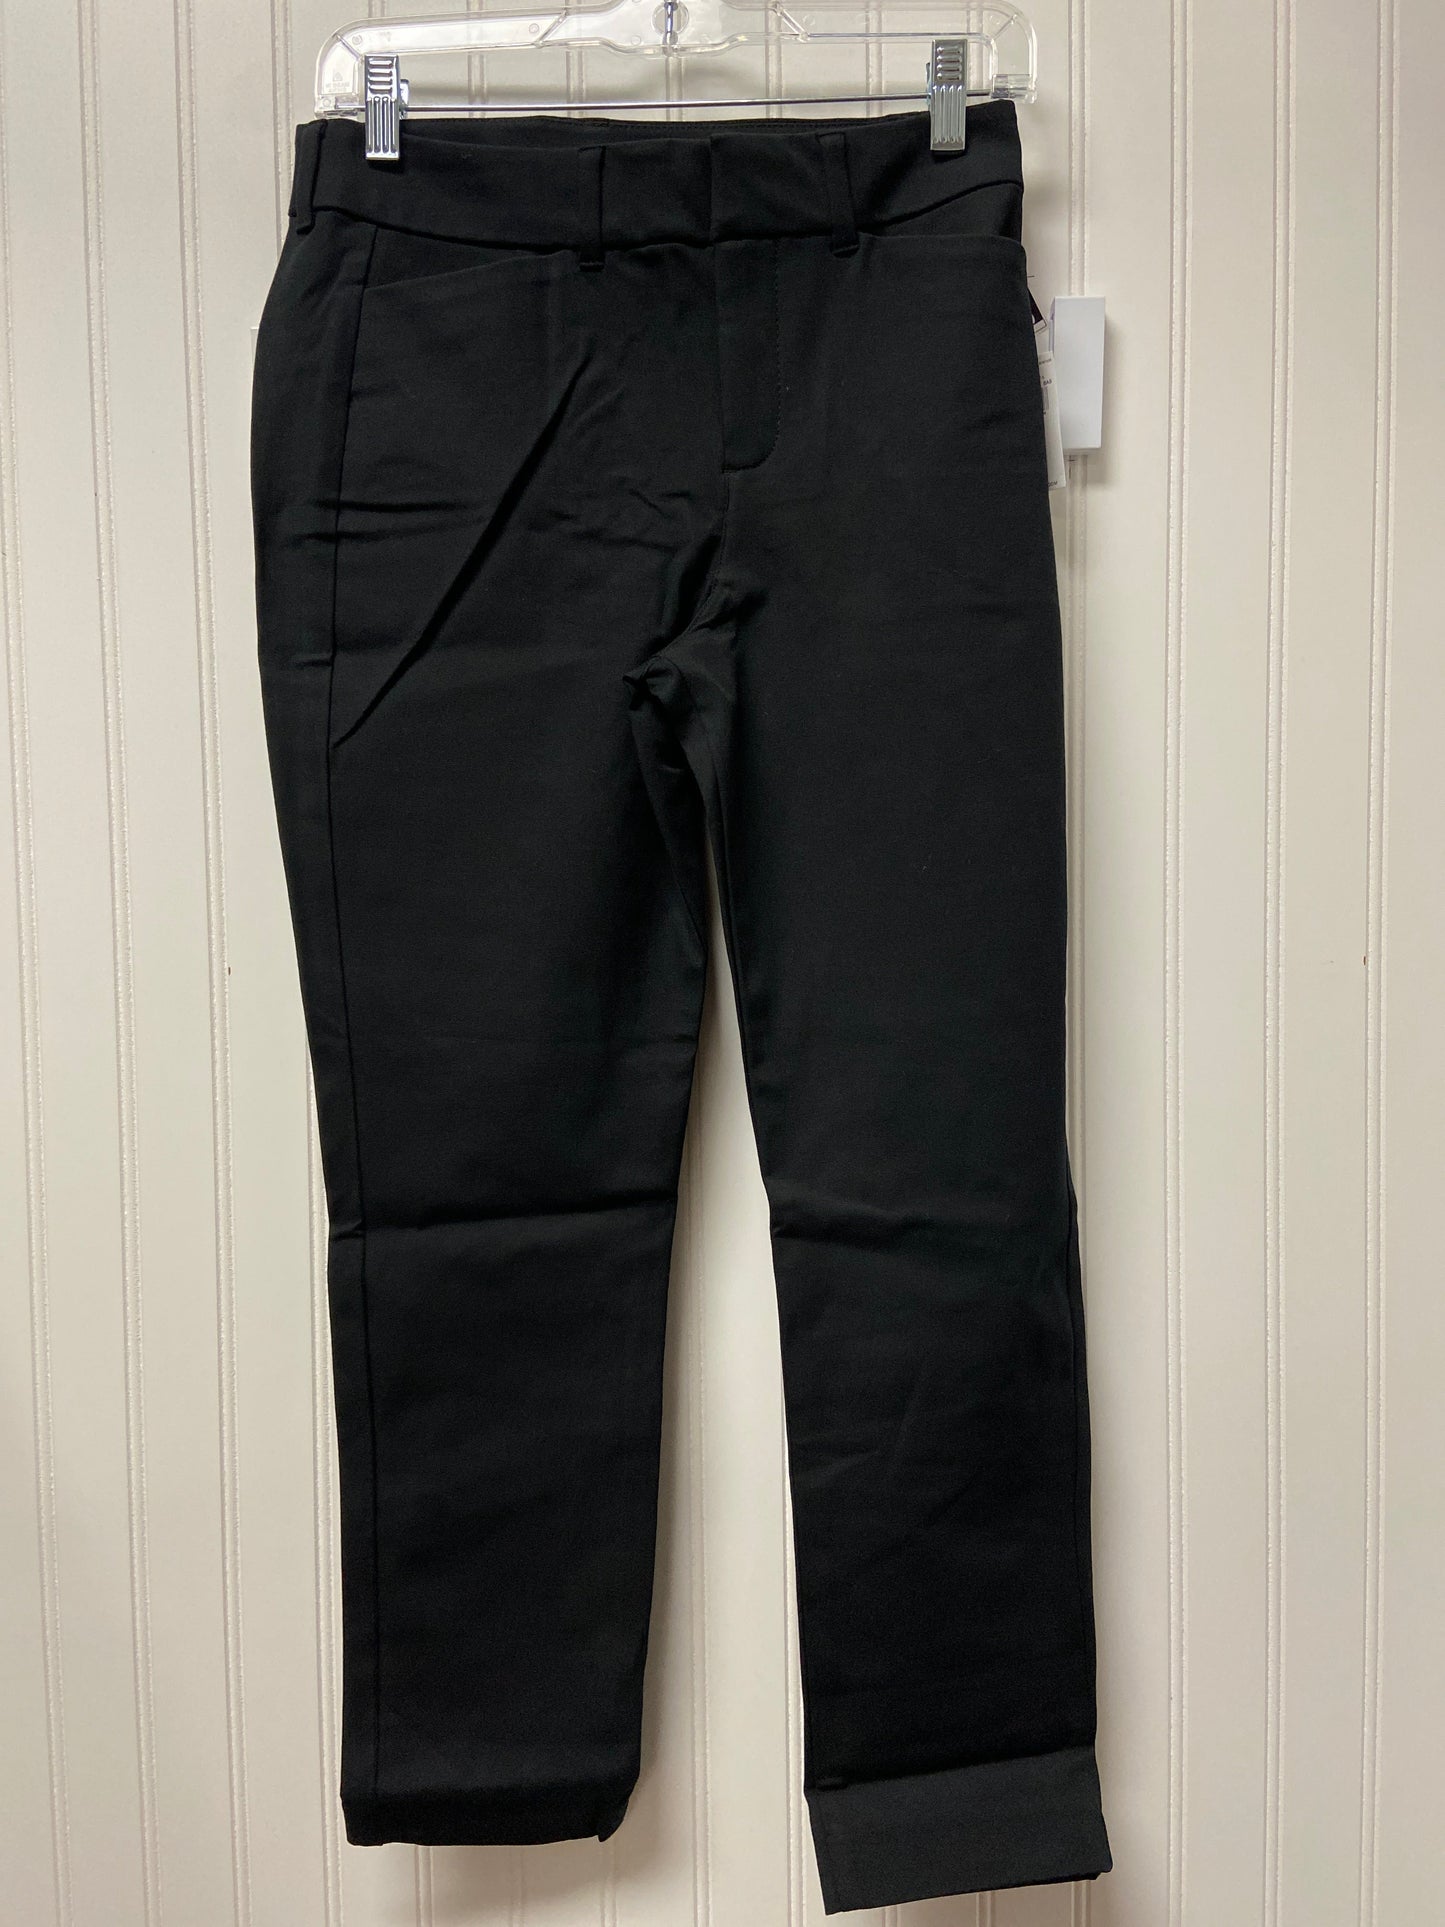 Black Pants Other Old Navy, Size 4petite